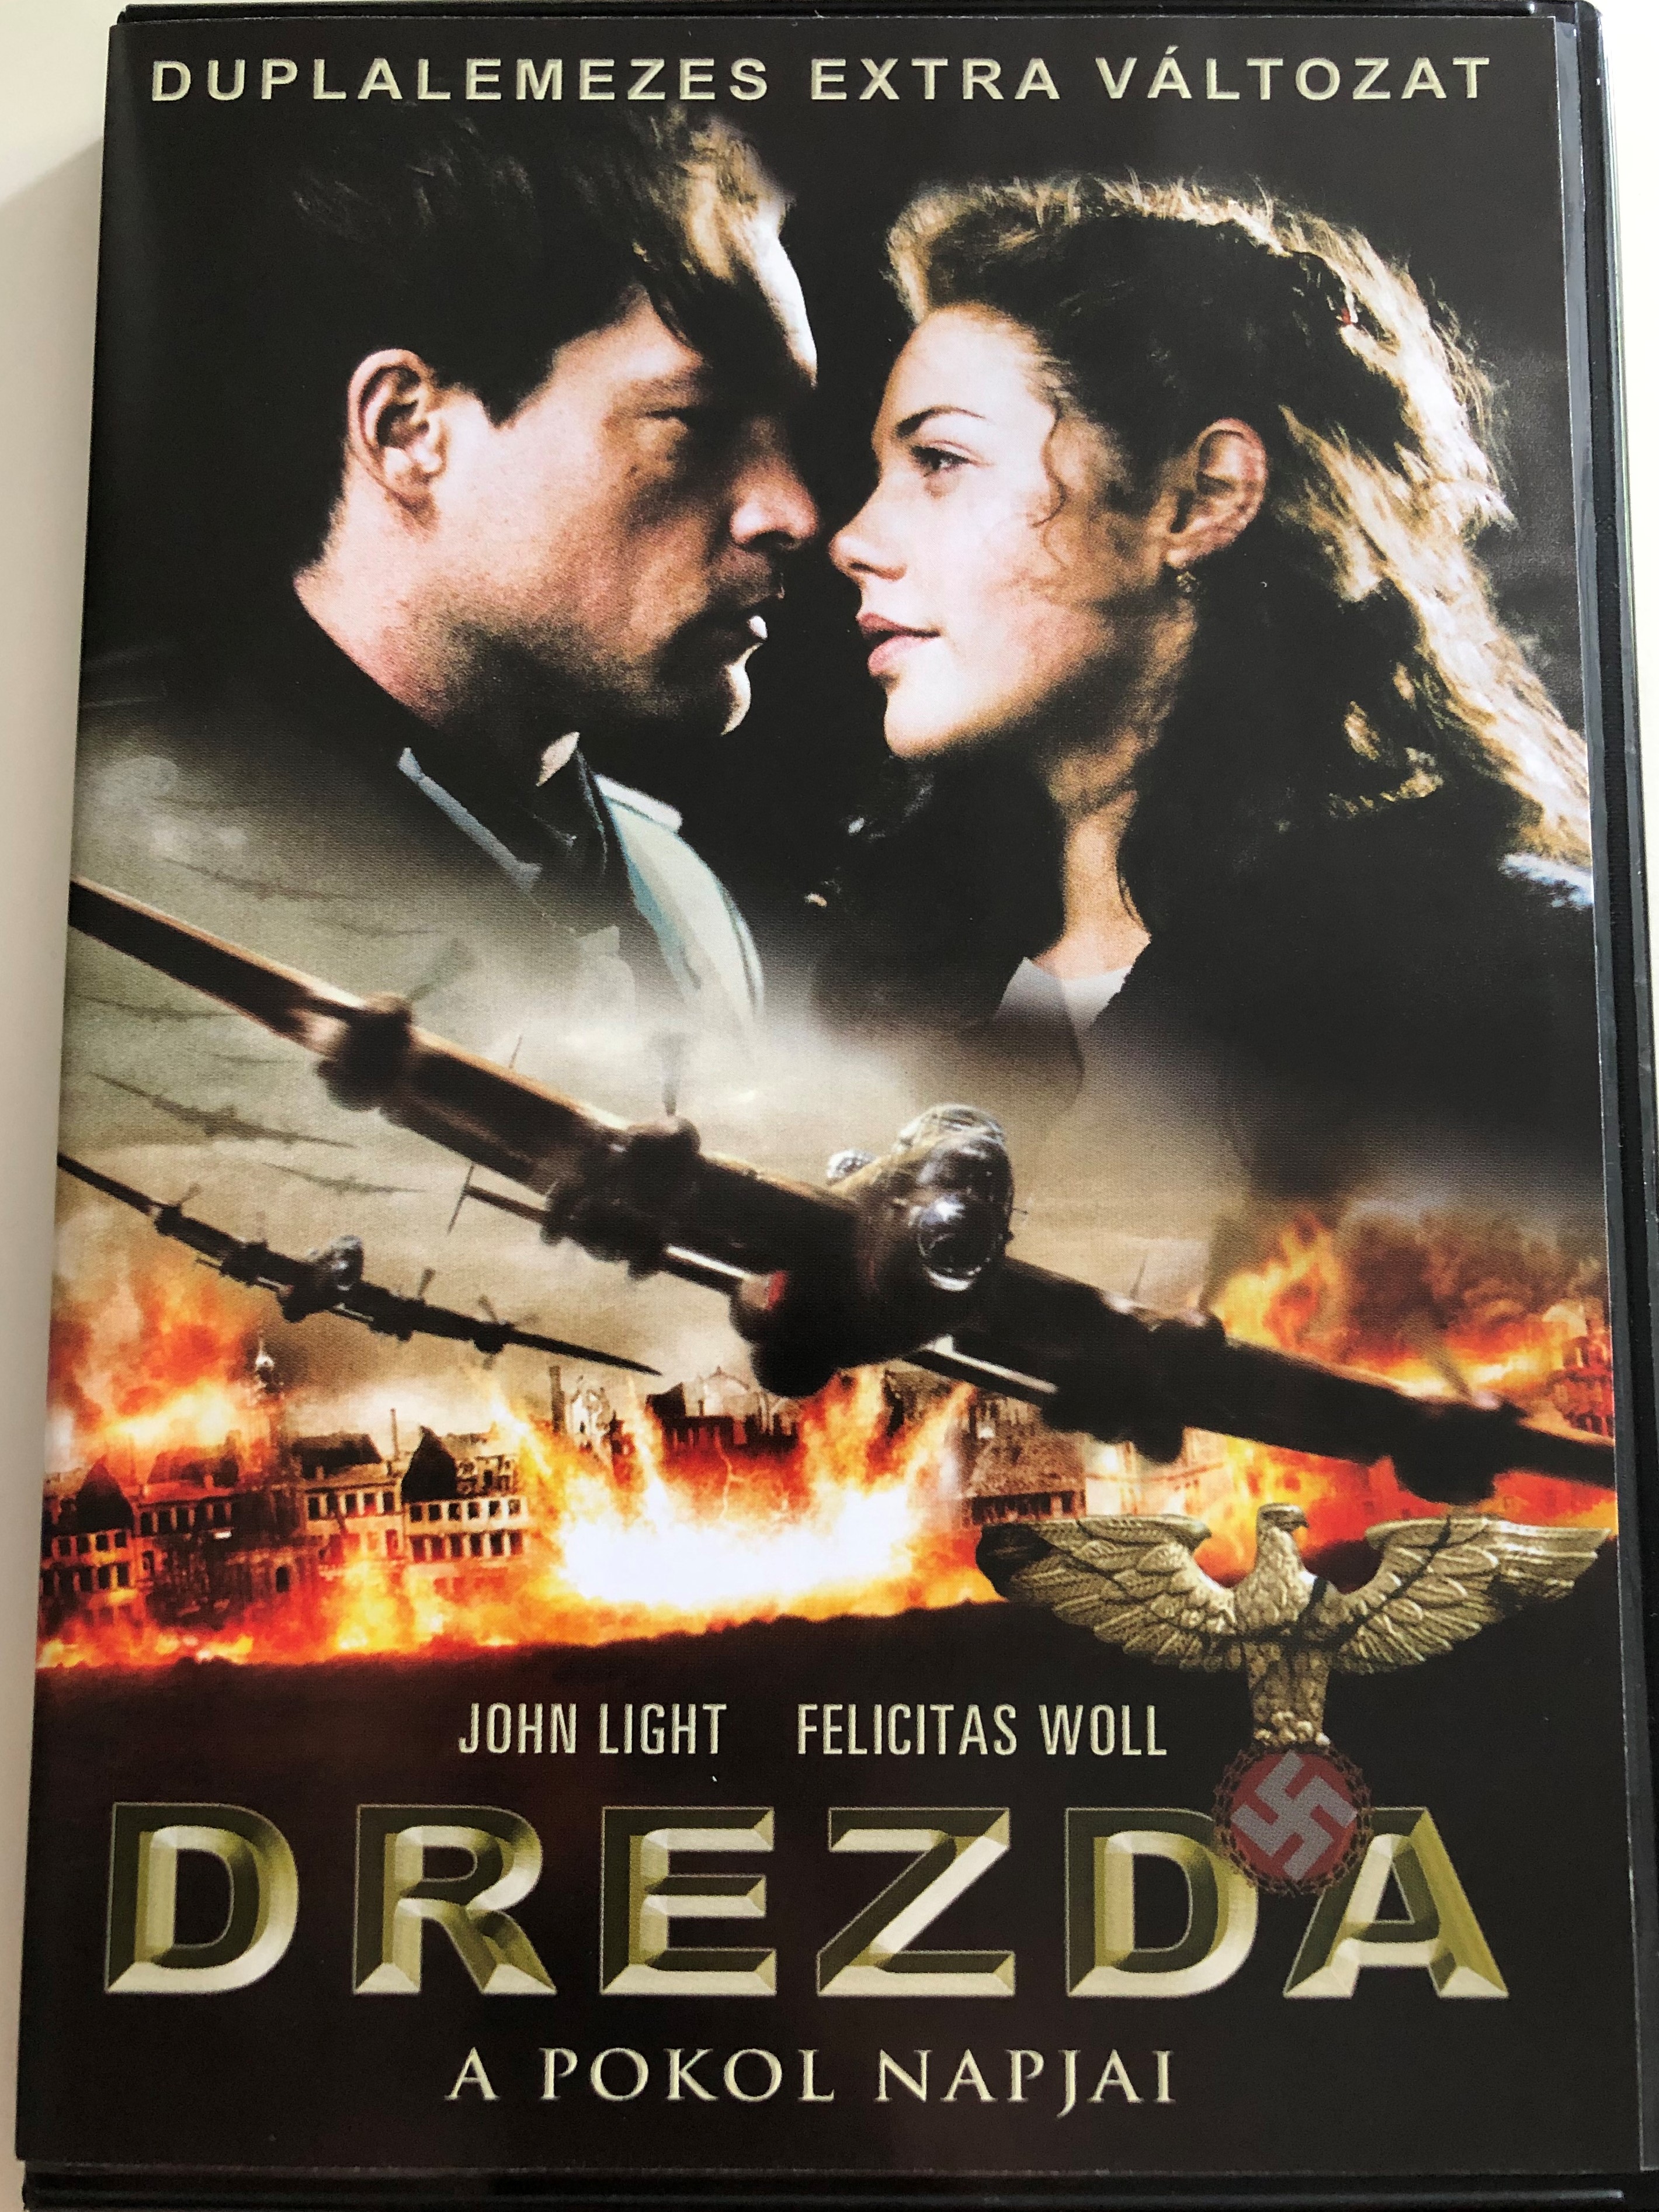 Dresden DVD 2007 Drezda - A Pokol Napjai / Directed by Roland Suso Richter  / Starring: John Light, Felicitas Woll, Benjamin Sadler / 2 Disc special  edition - bibleinmylanguage